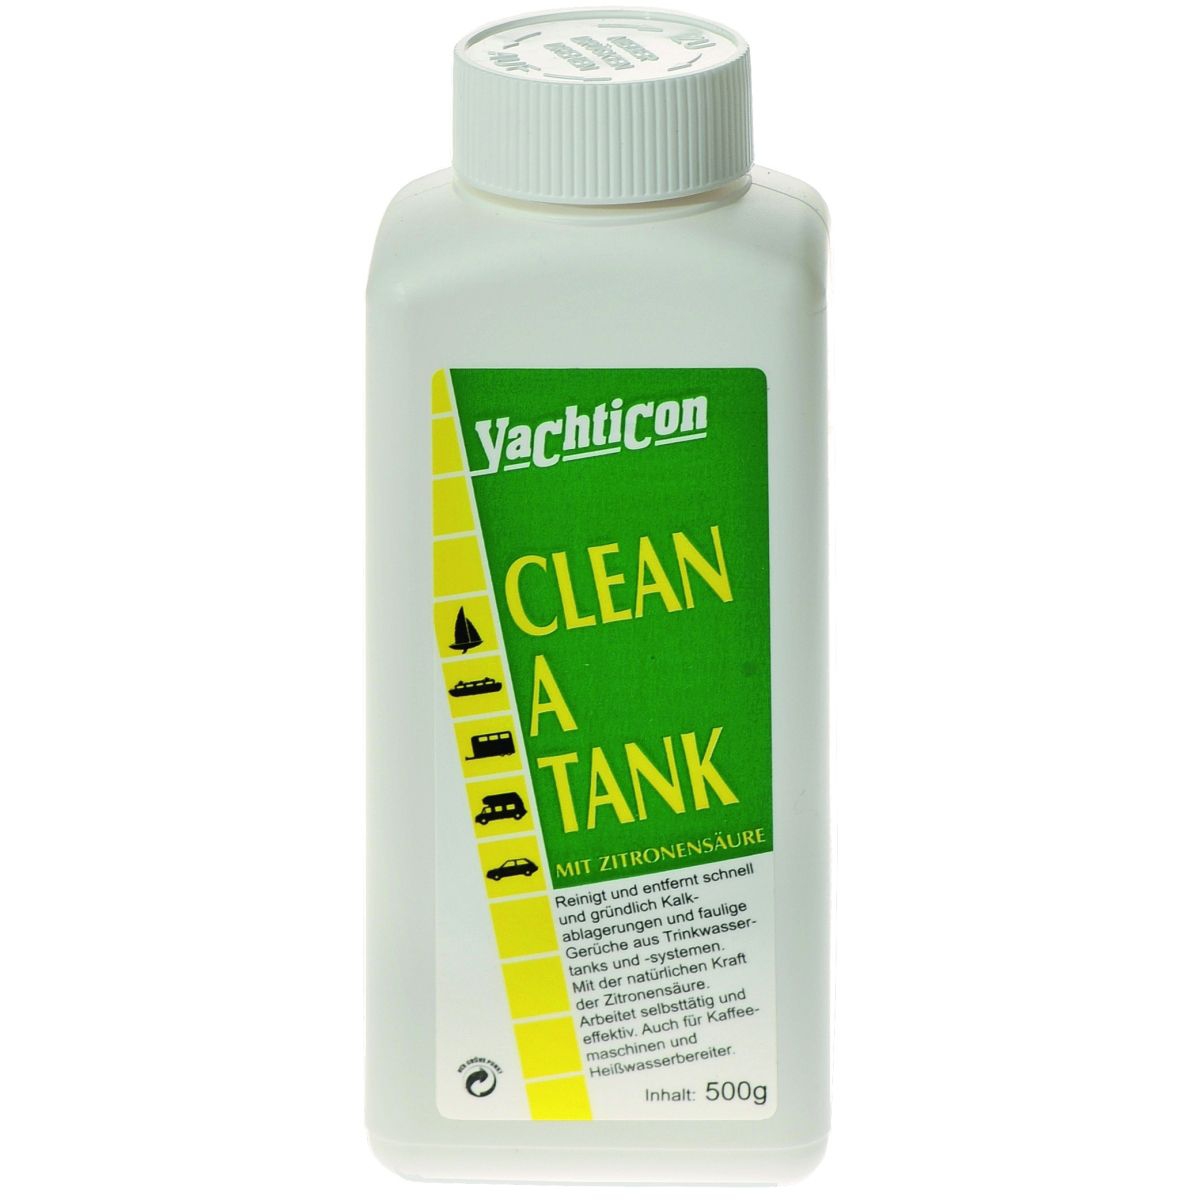 Yachticon Clean a Tank Tankreiniger